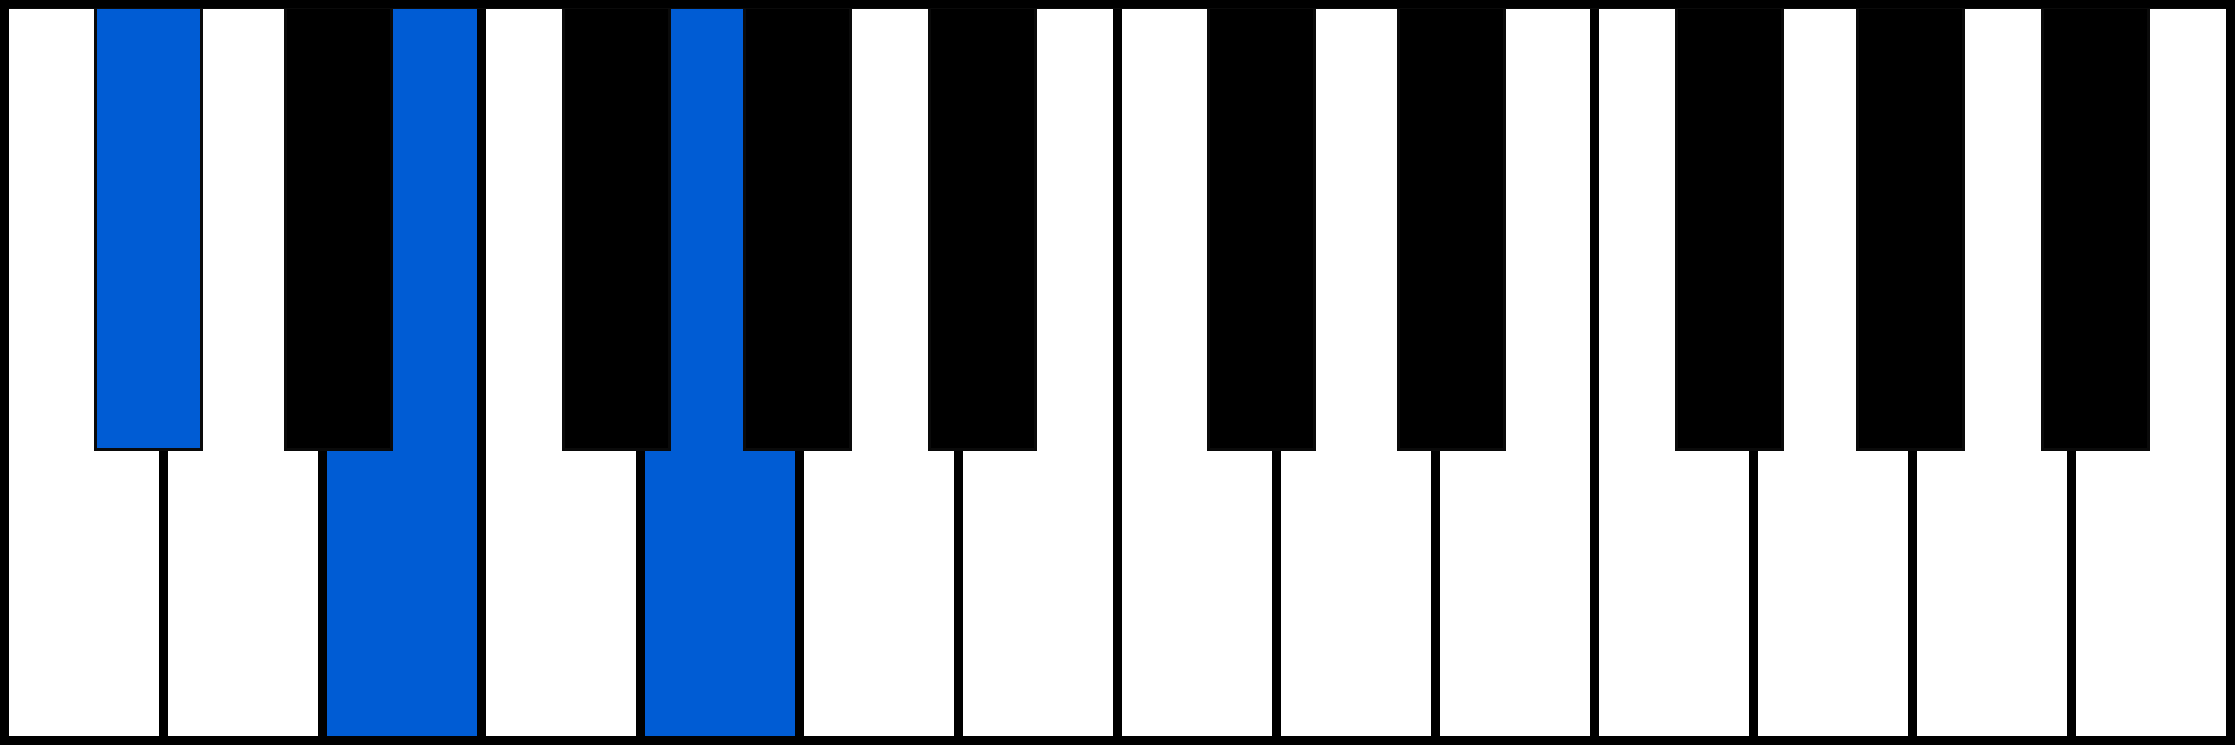 C#dim piano chord